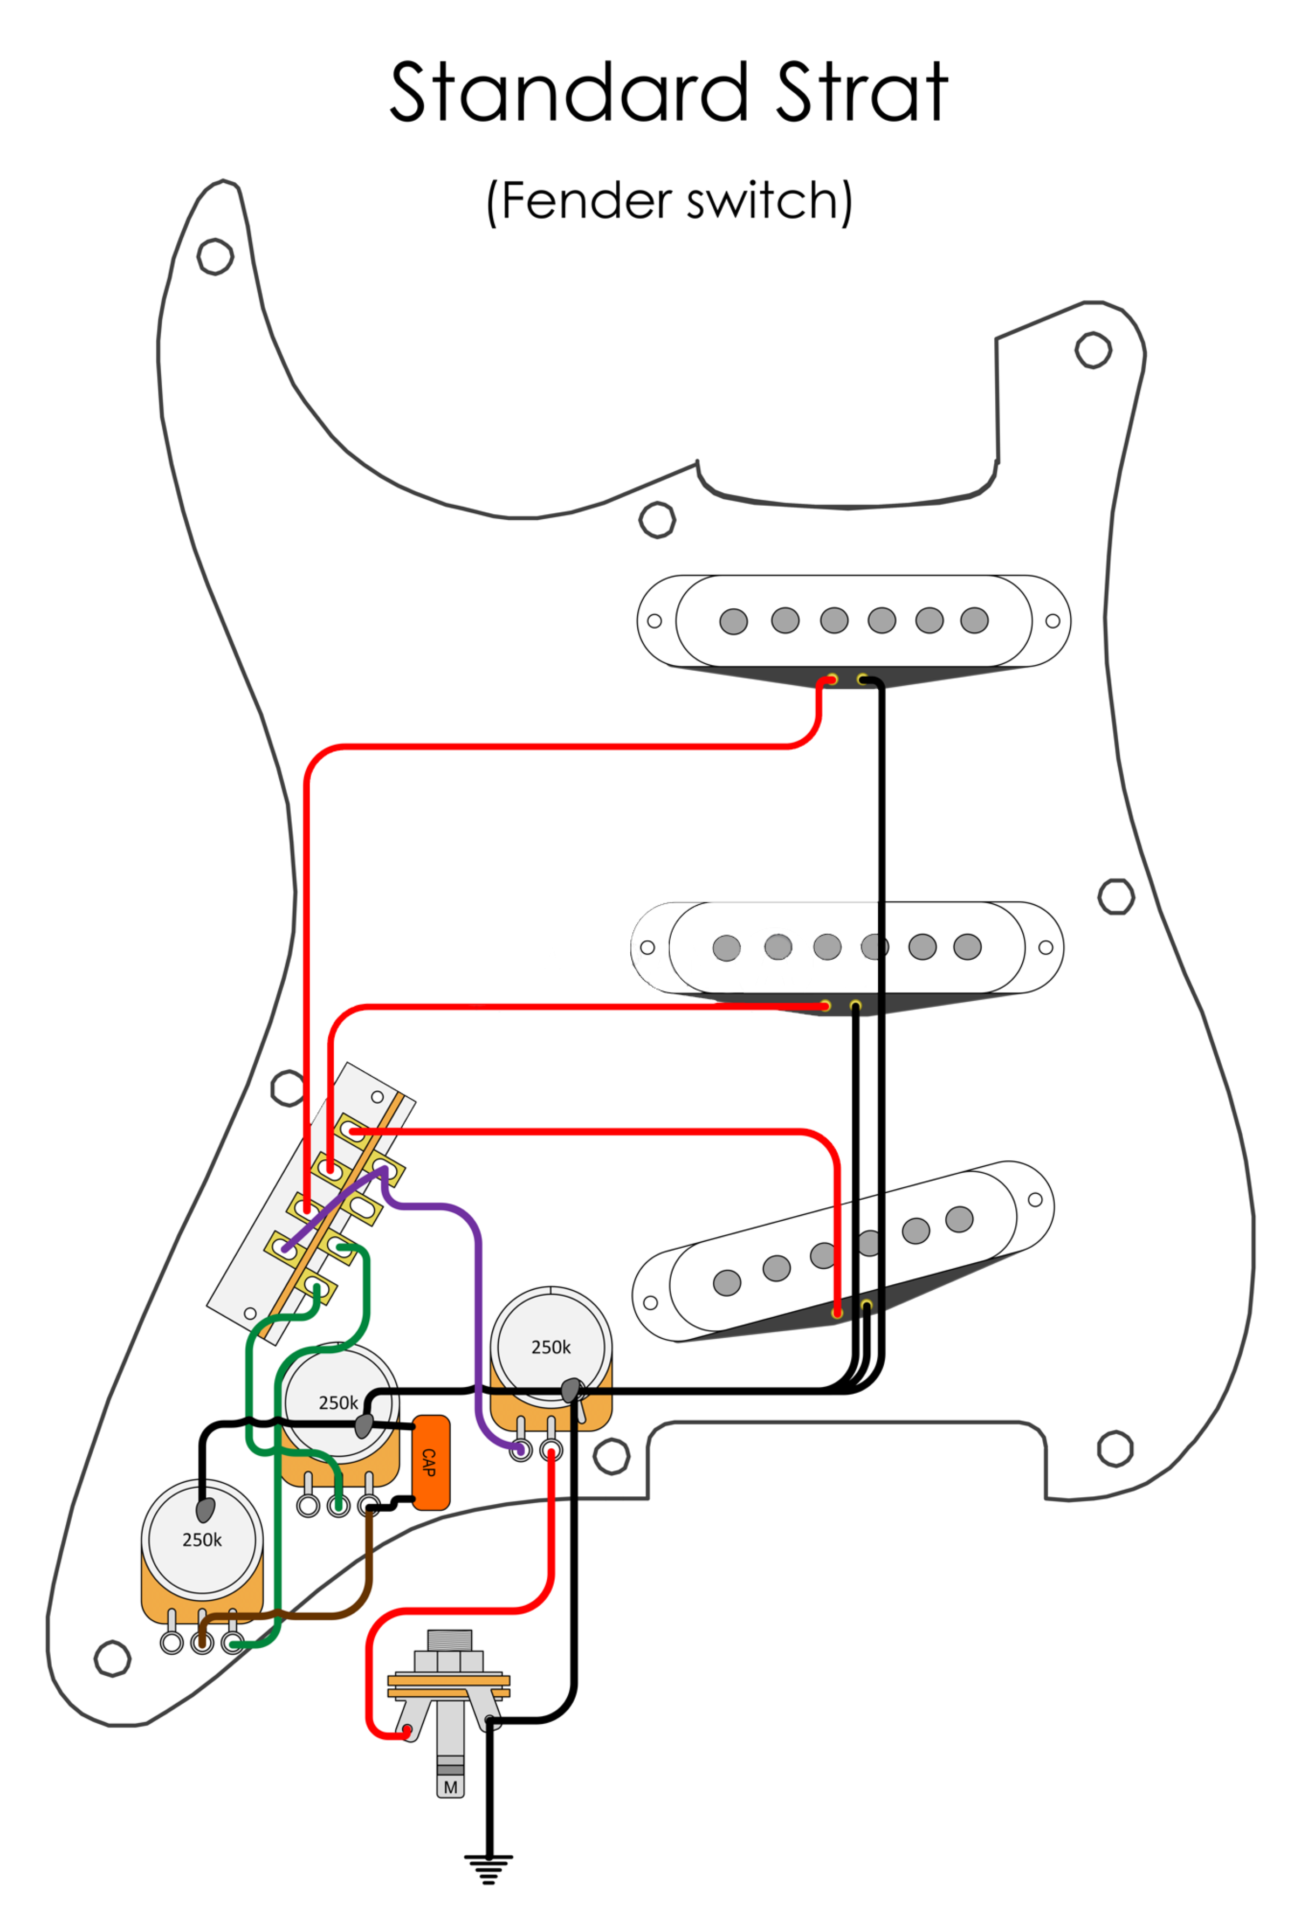 Wiring Diagram Strat Guitar from blackwoodguitarworks.com